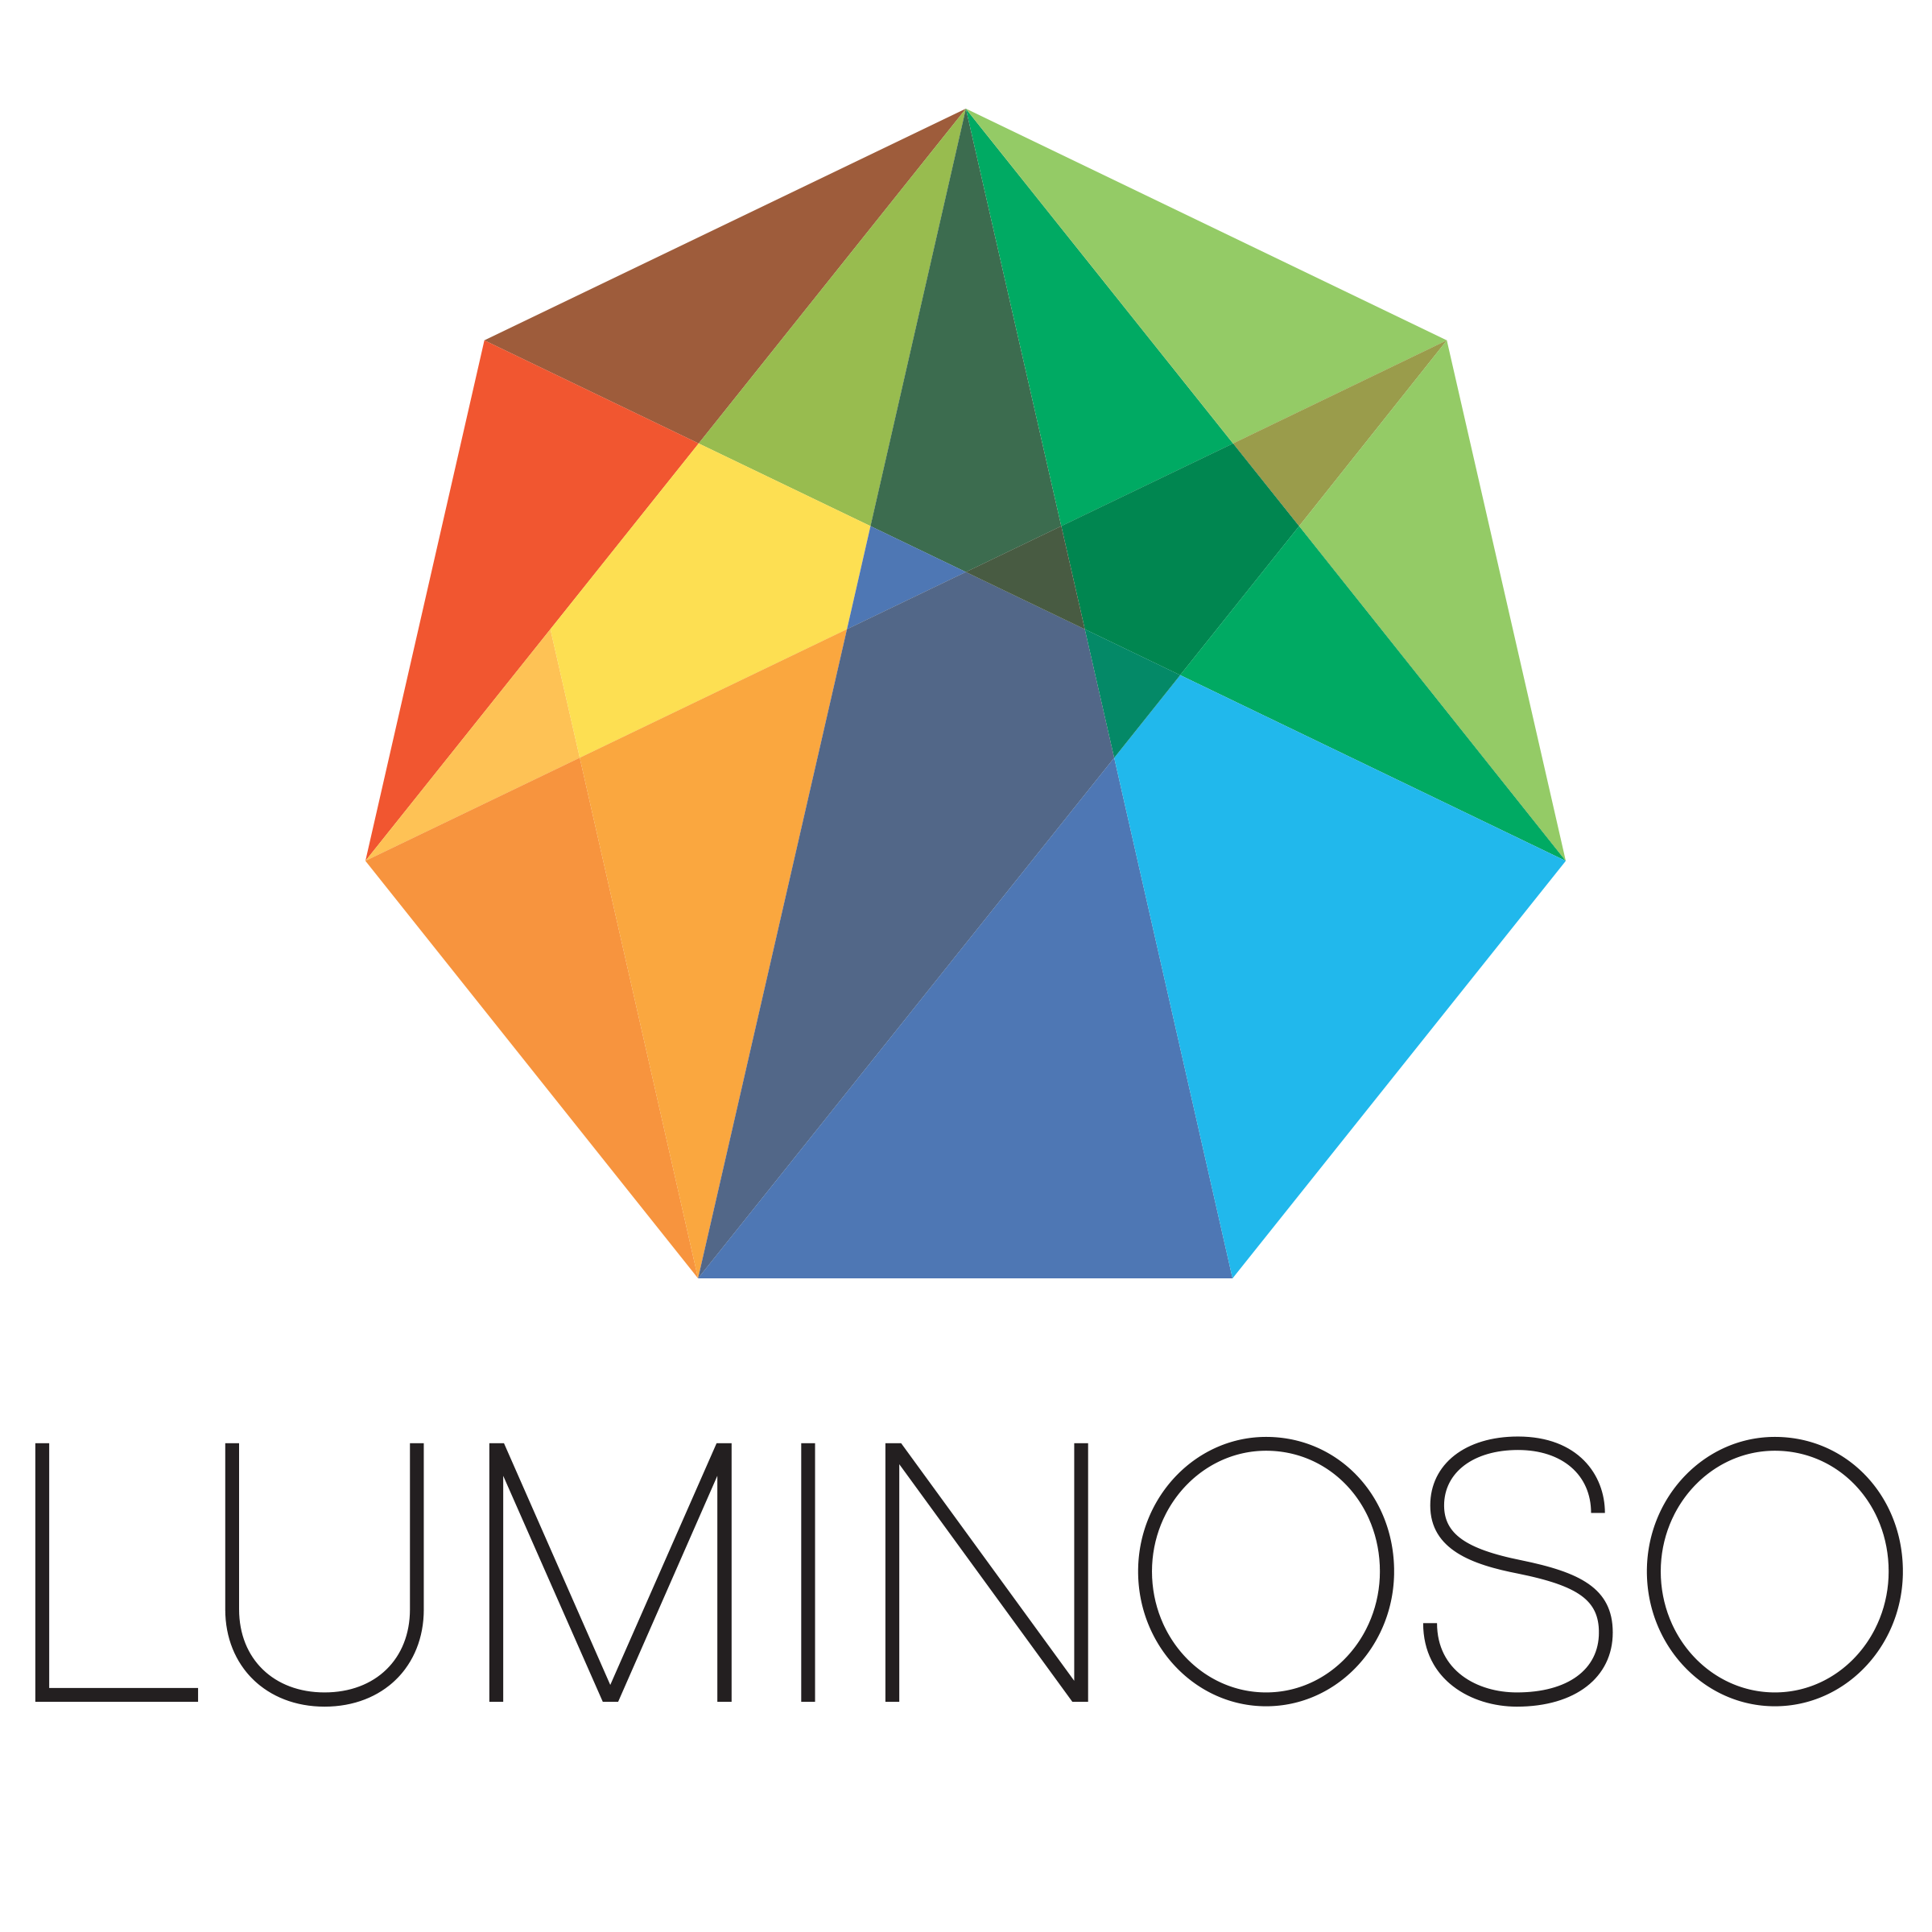 Luminoso Logo - Luminoso Overview Video